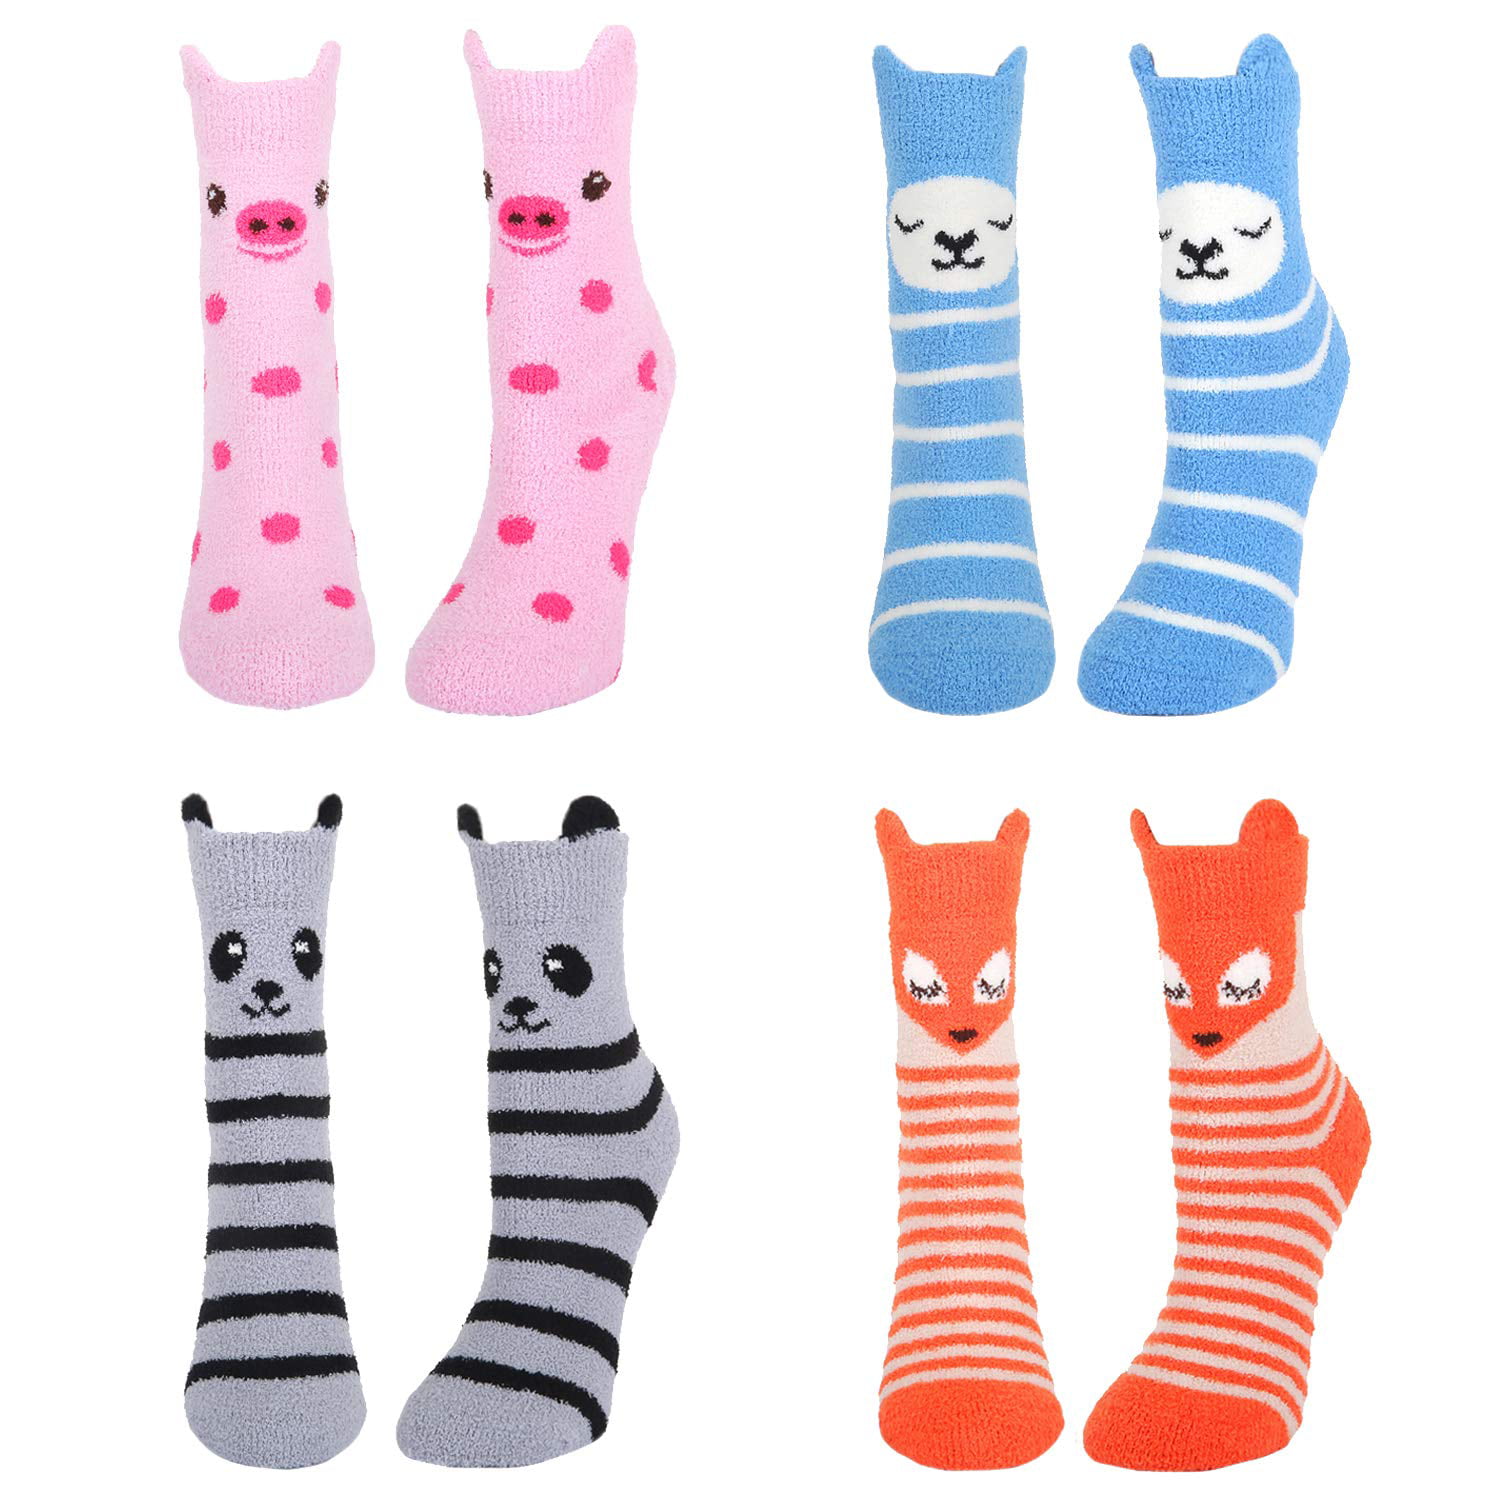 Clothing Socks - Cute Fuzzy Colorful Fluffy Warm Indoors Slipper Socks ...